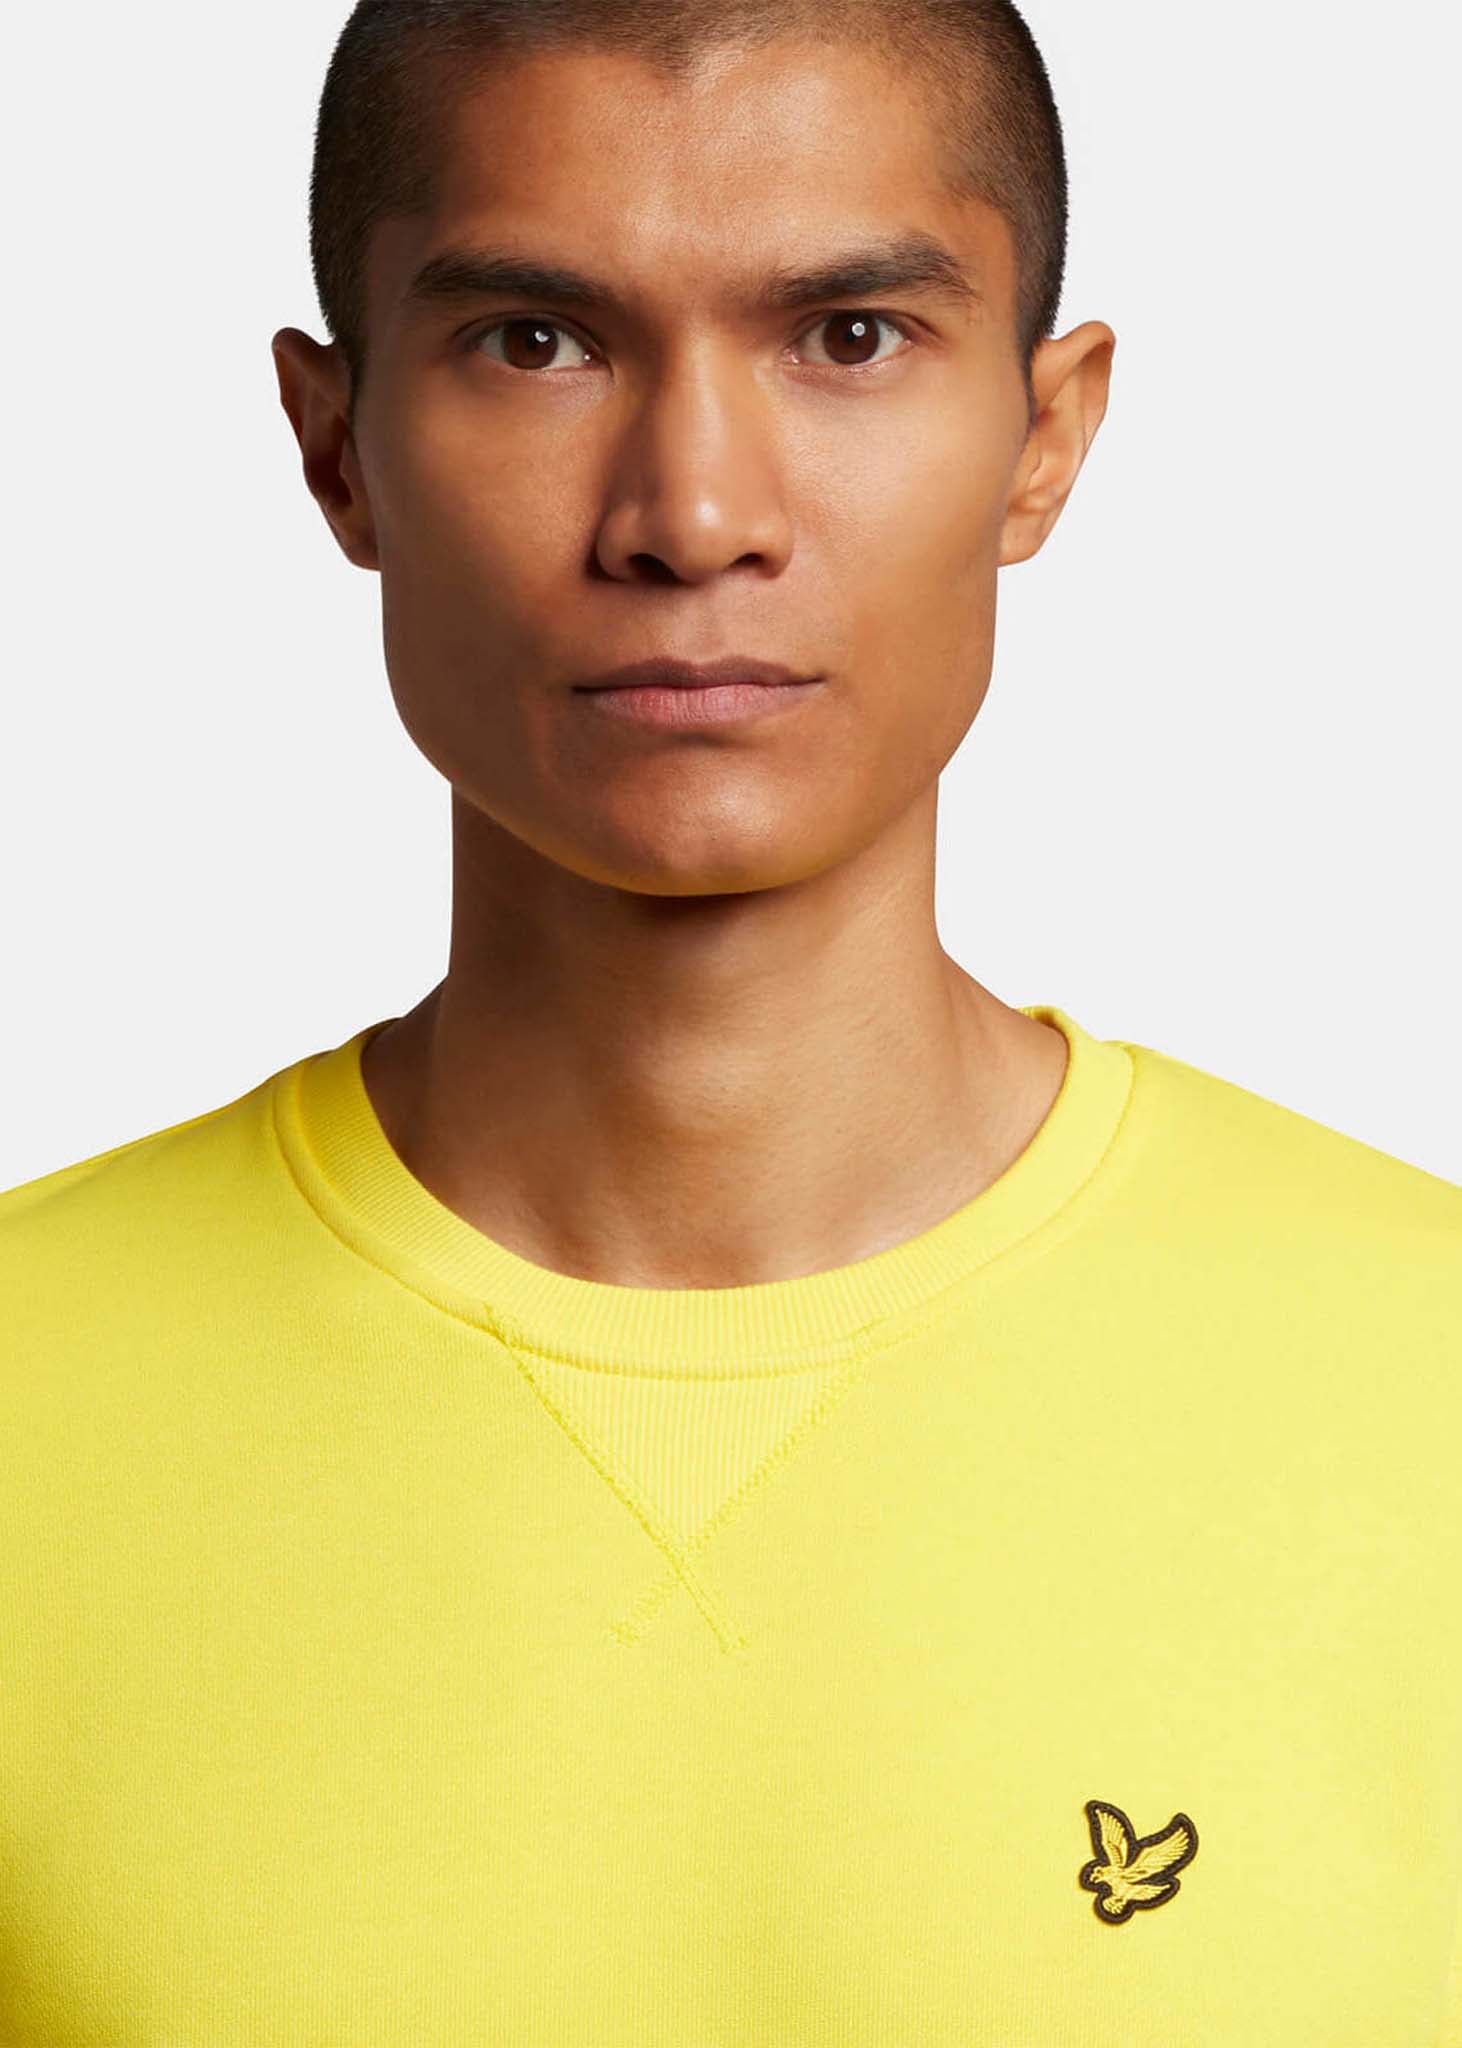 Lyle & Scott Truien  Crew neck sweatshirt - sunshine yellow 